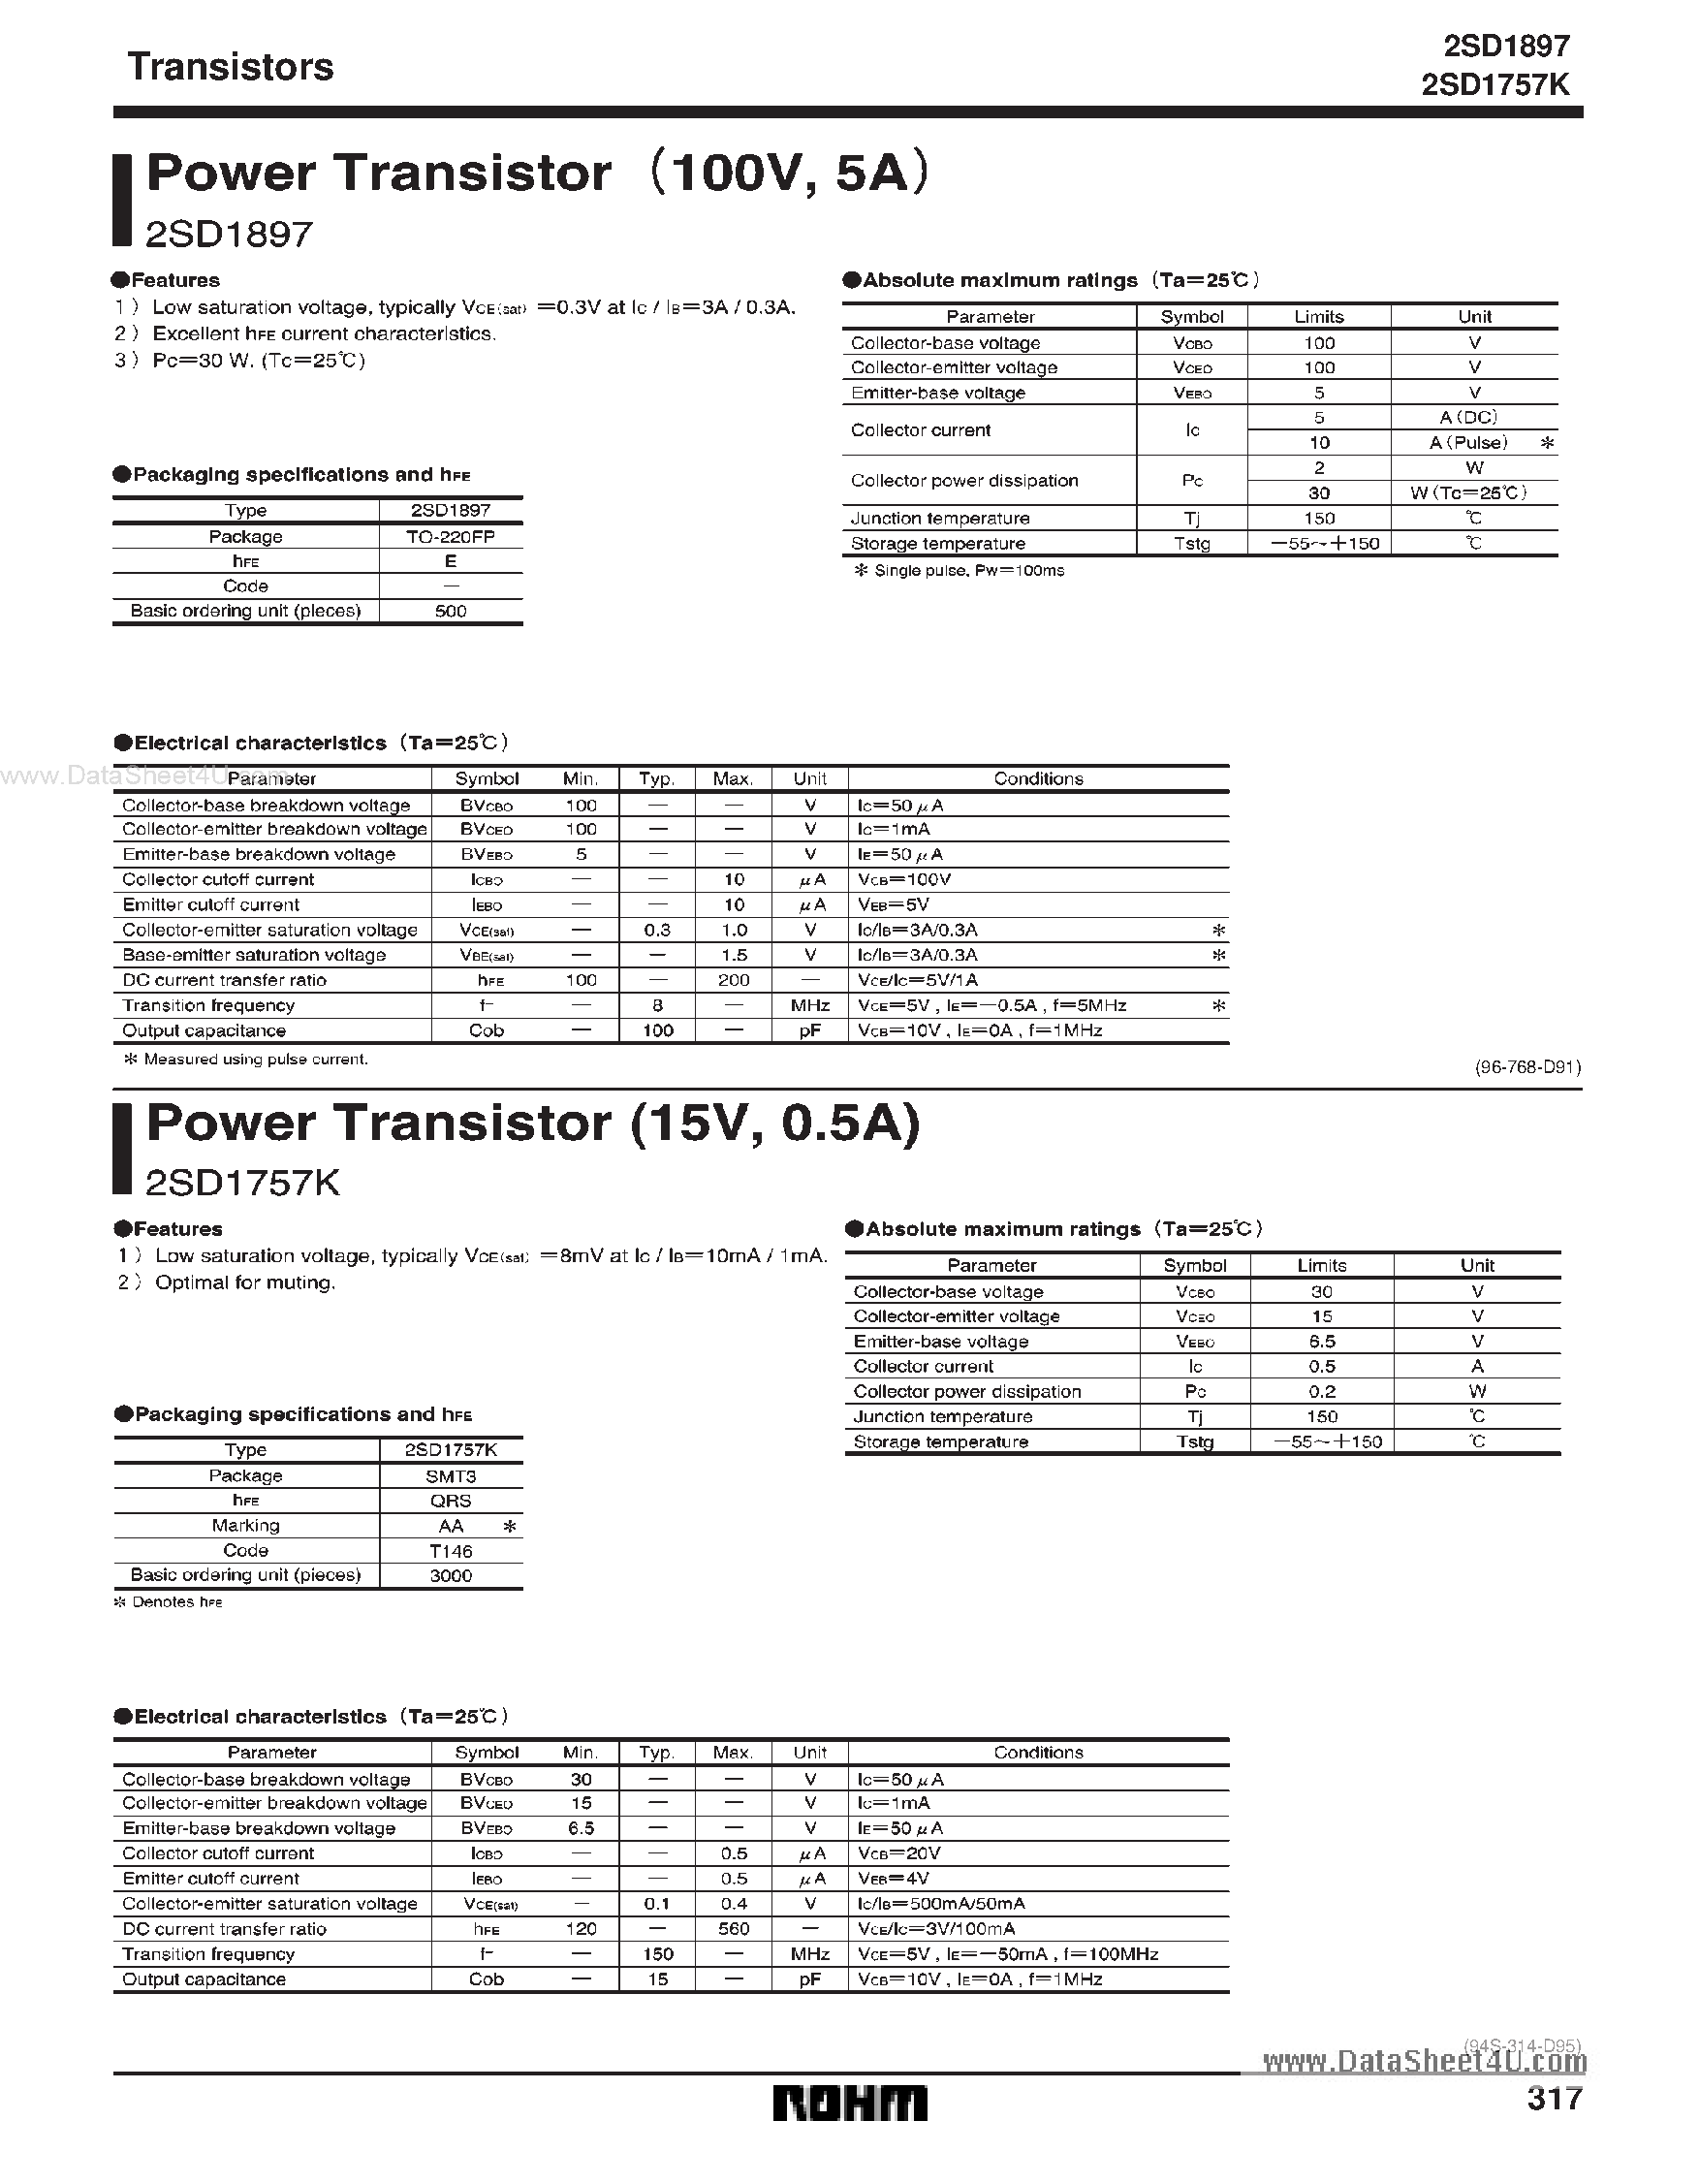 Datasheet 2SD1757K - (2SD1897 / 2SD1757K) Power Transistor page 1